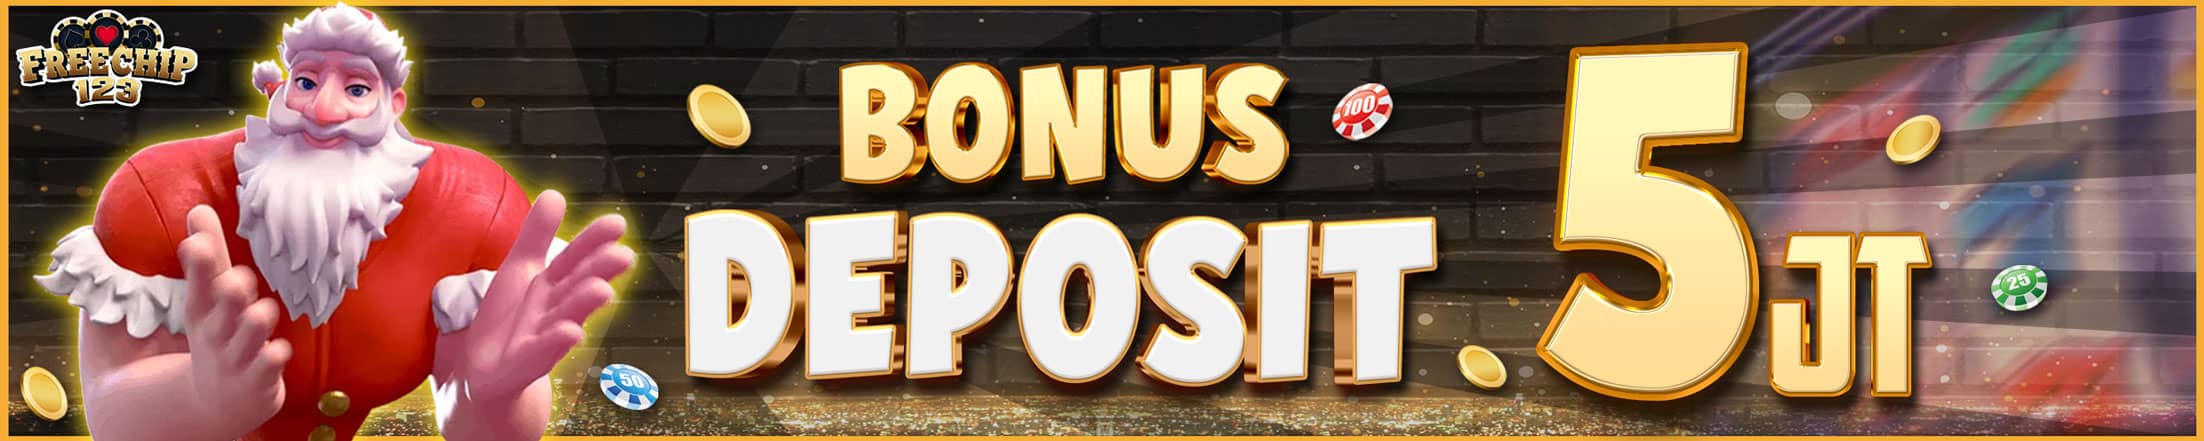 Bonus Deposit 5jt